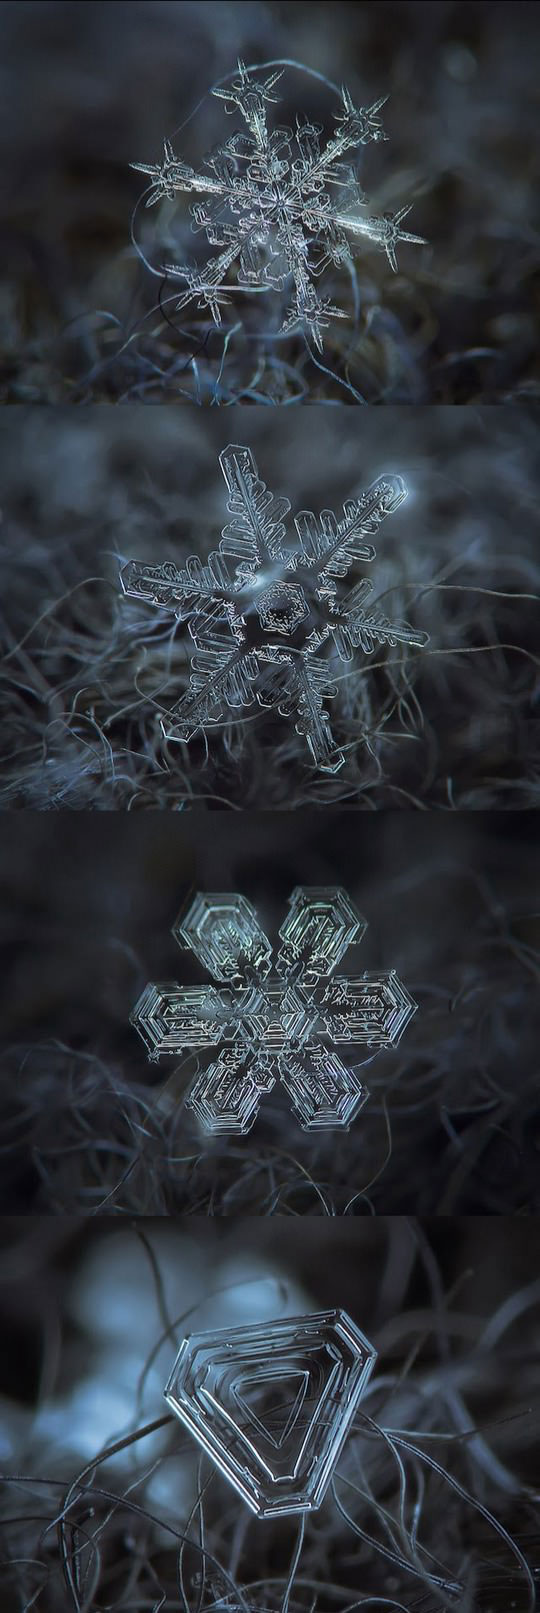 Micro-Photography Of Individual Snowflakes